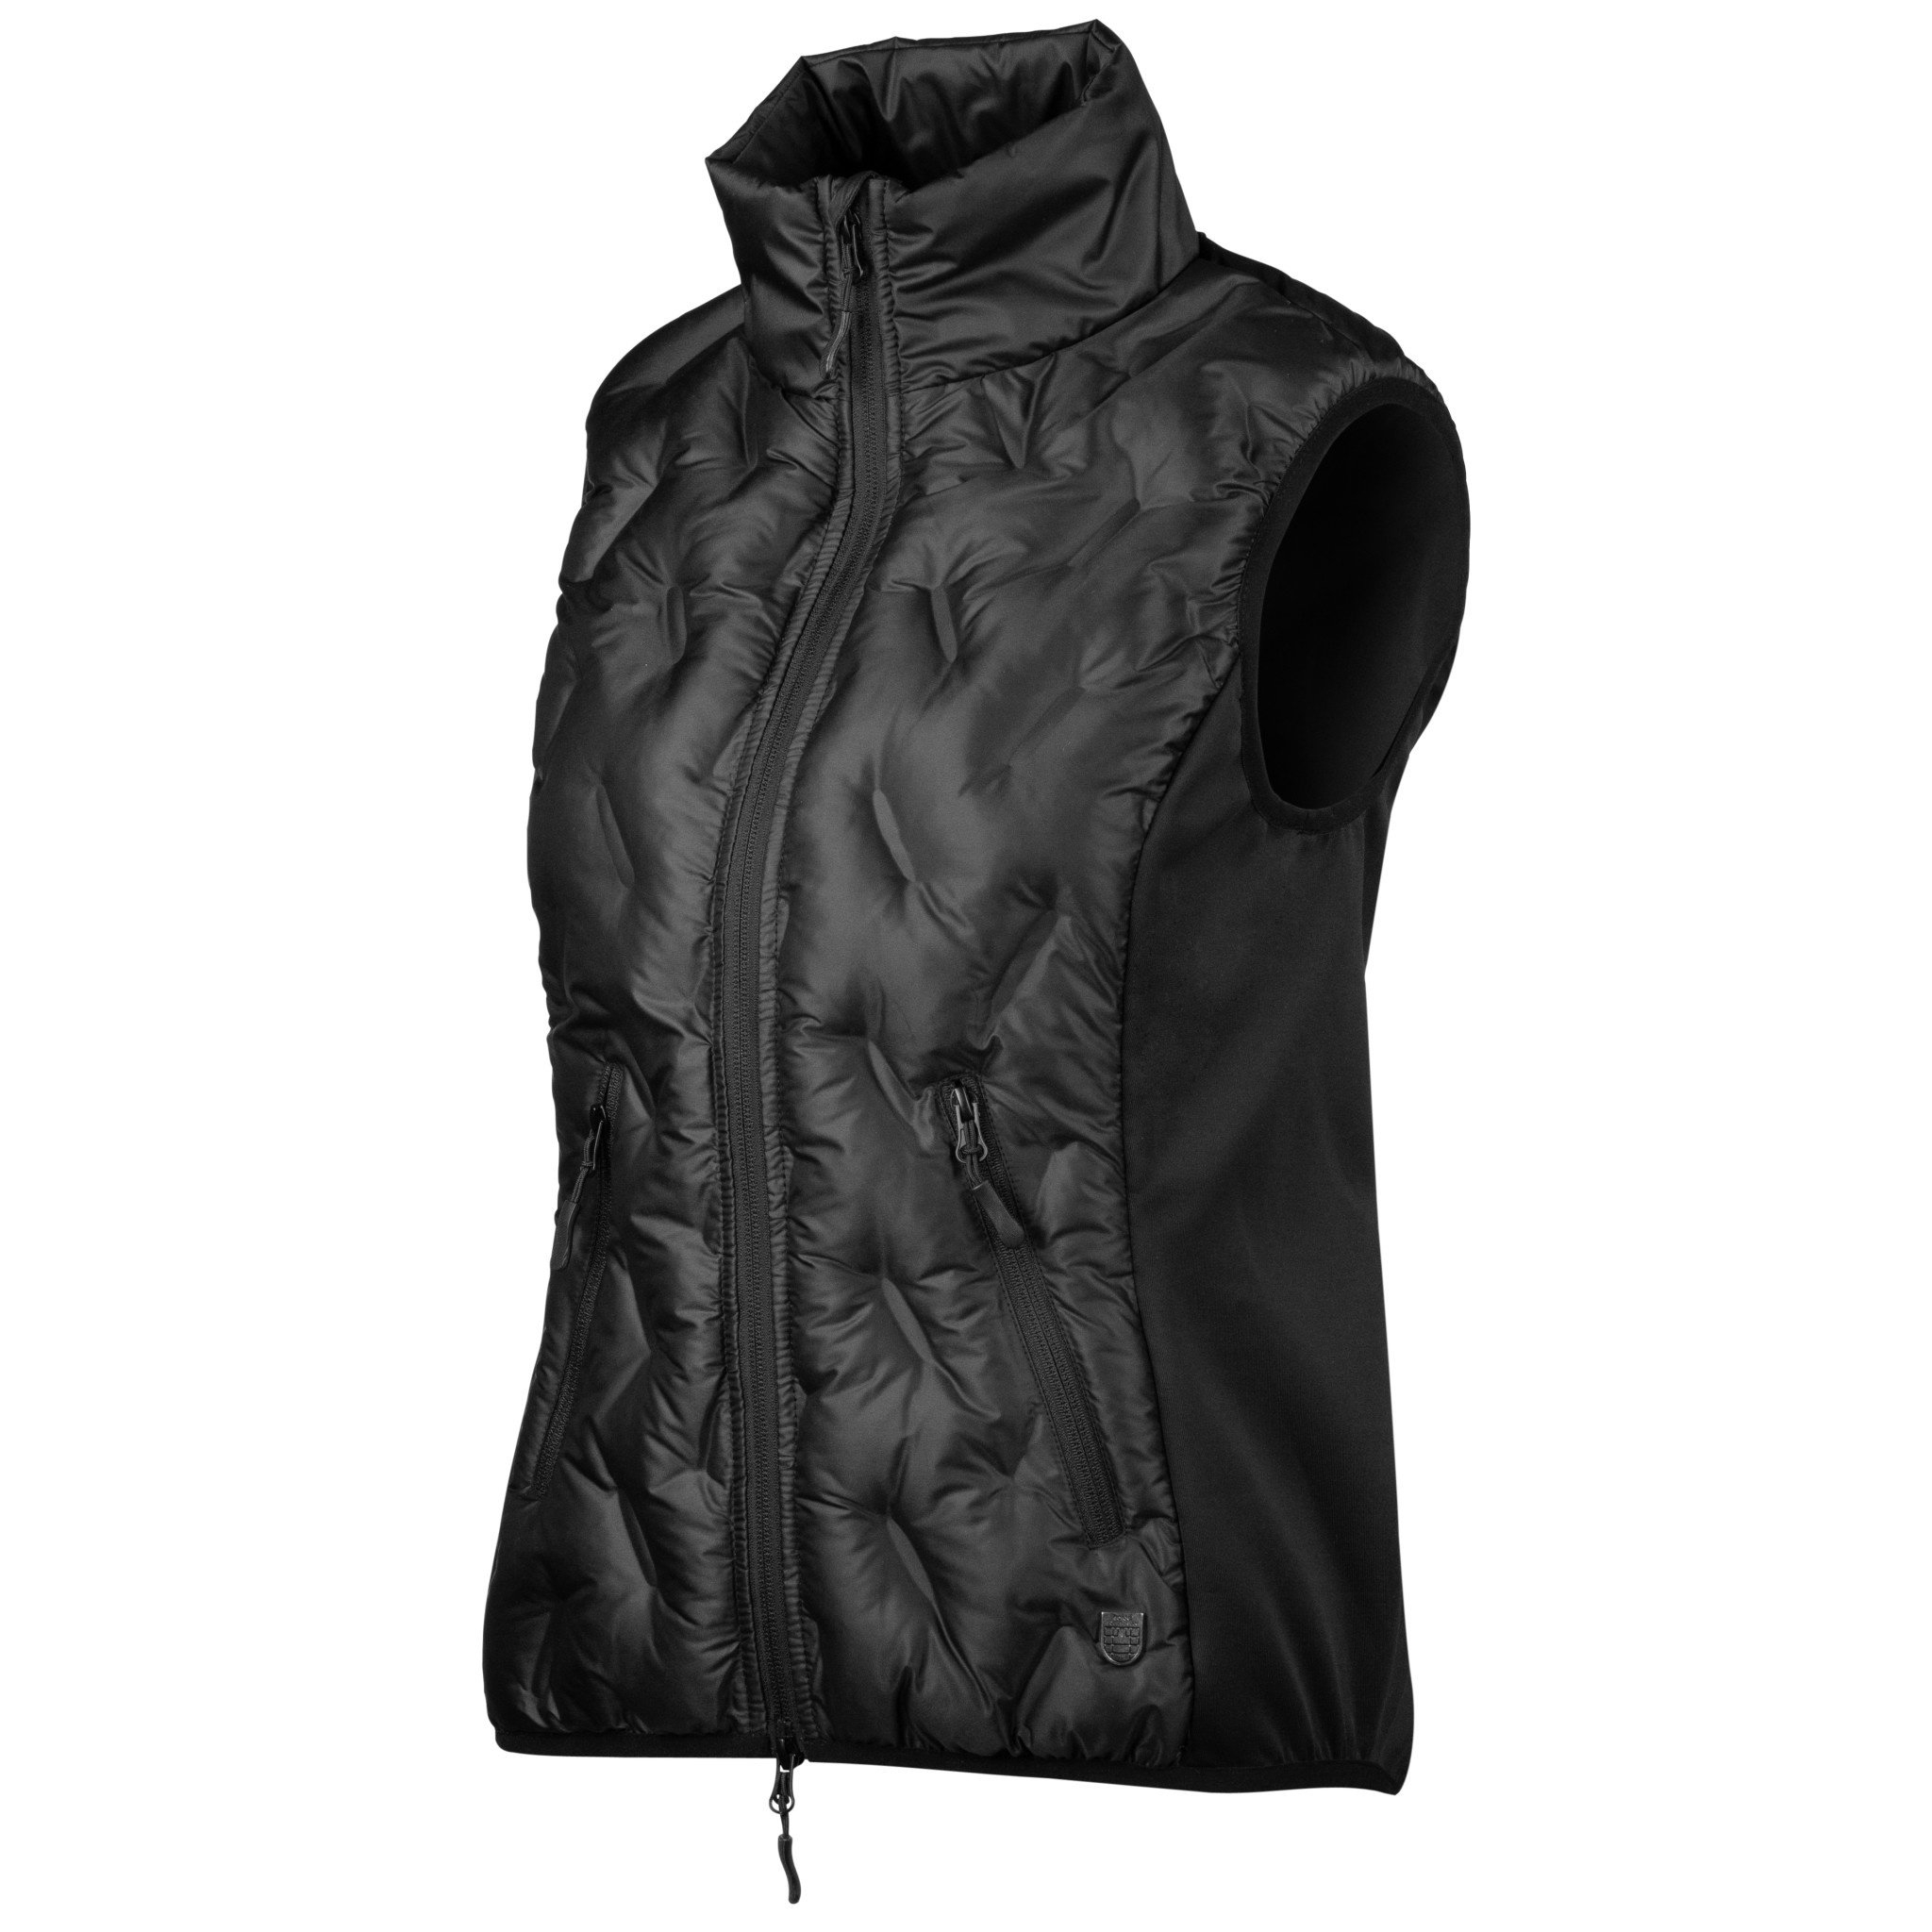 Stormtech Women's Gravity Thermal Vest with Sleek Profile - RIDE